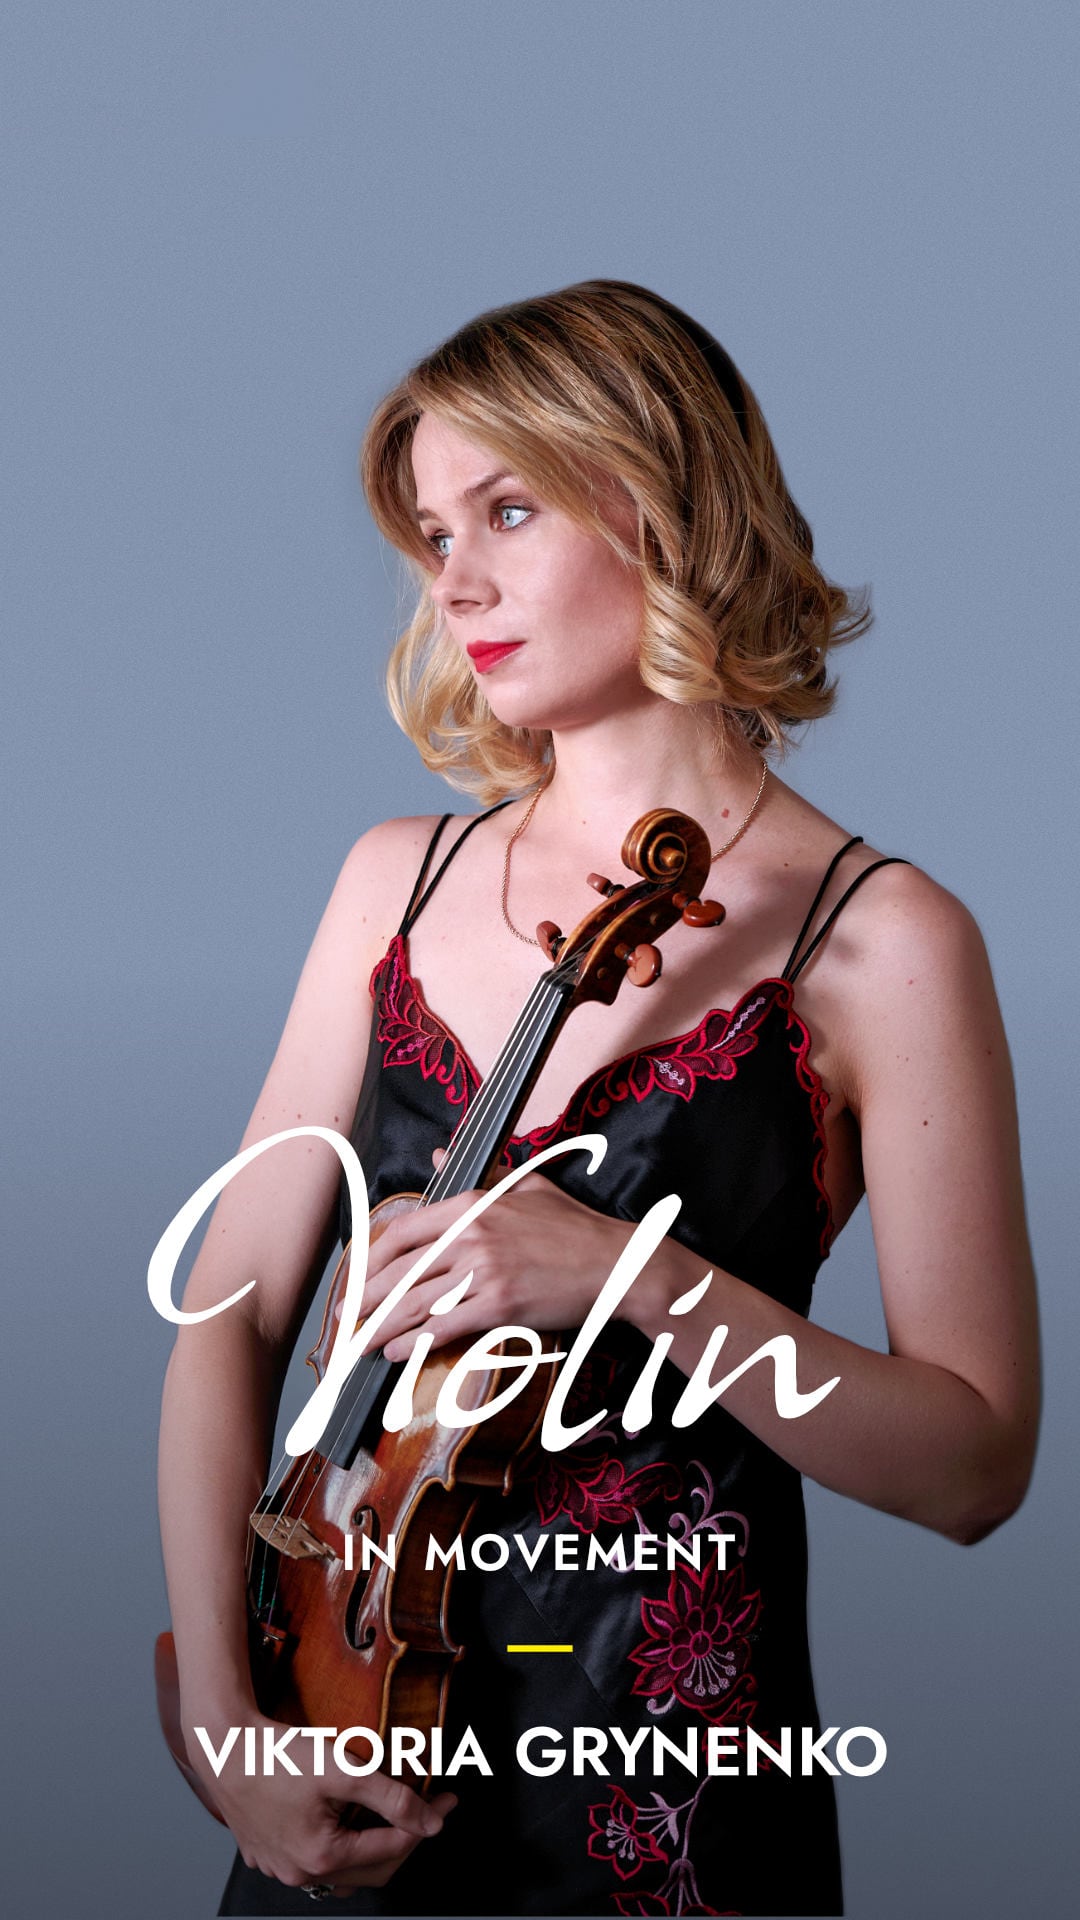 Viktoria Grynenko - Violin in Movement